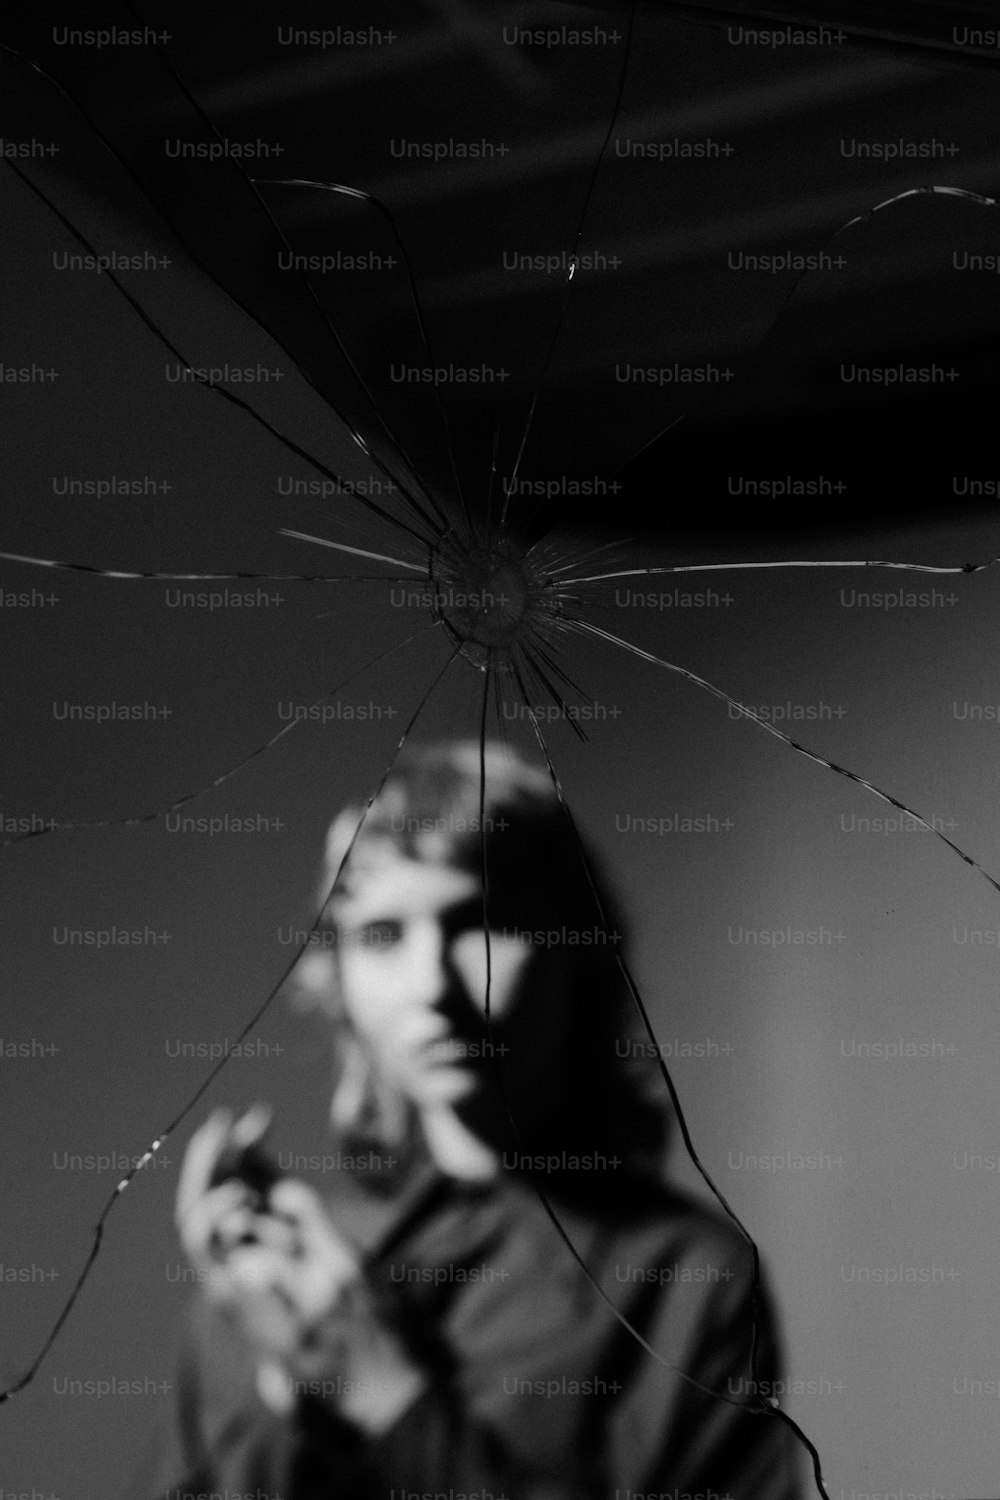 Un hombre sosteniendo un teléfono celular frente a un vidrio roto